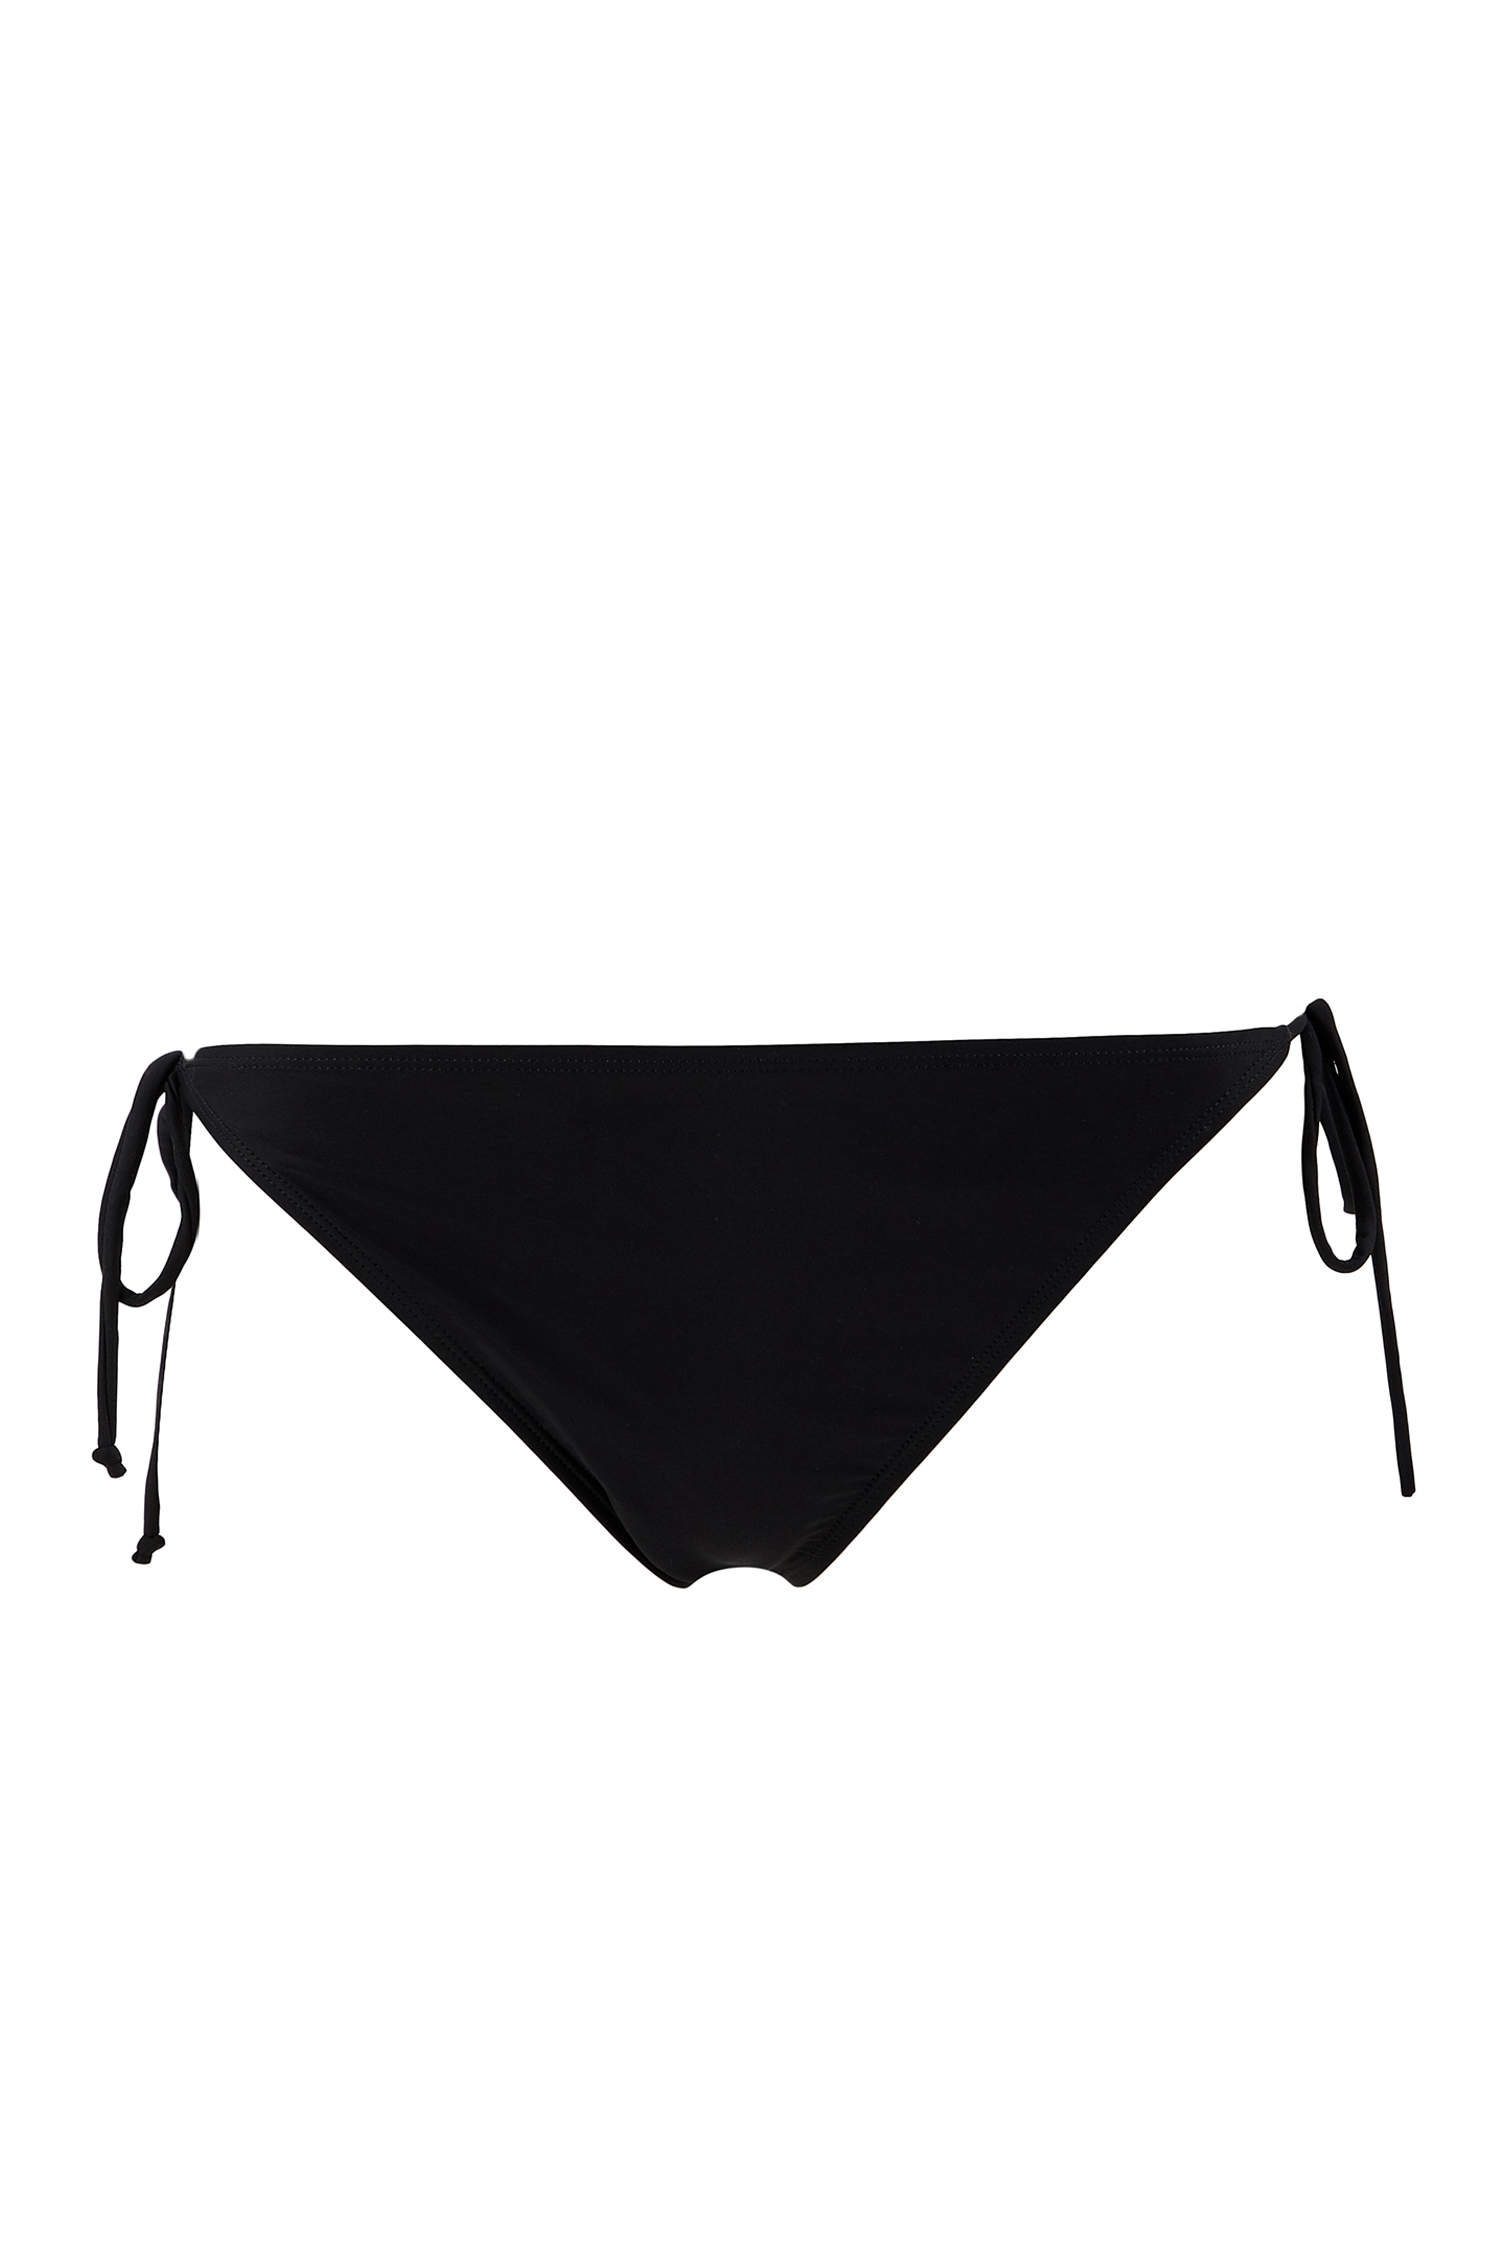 Black WOMAN Drawstring Sides Basic Bikini Bottoms 1832085 | DeFacto